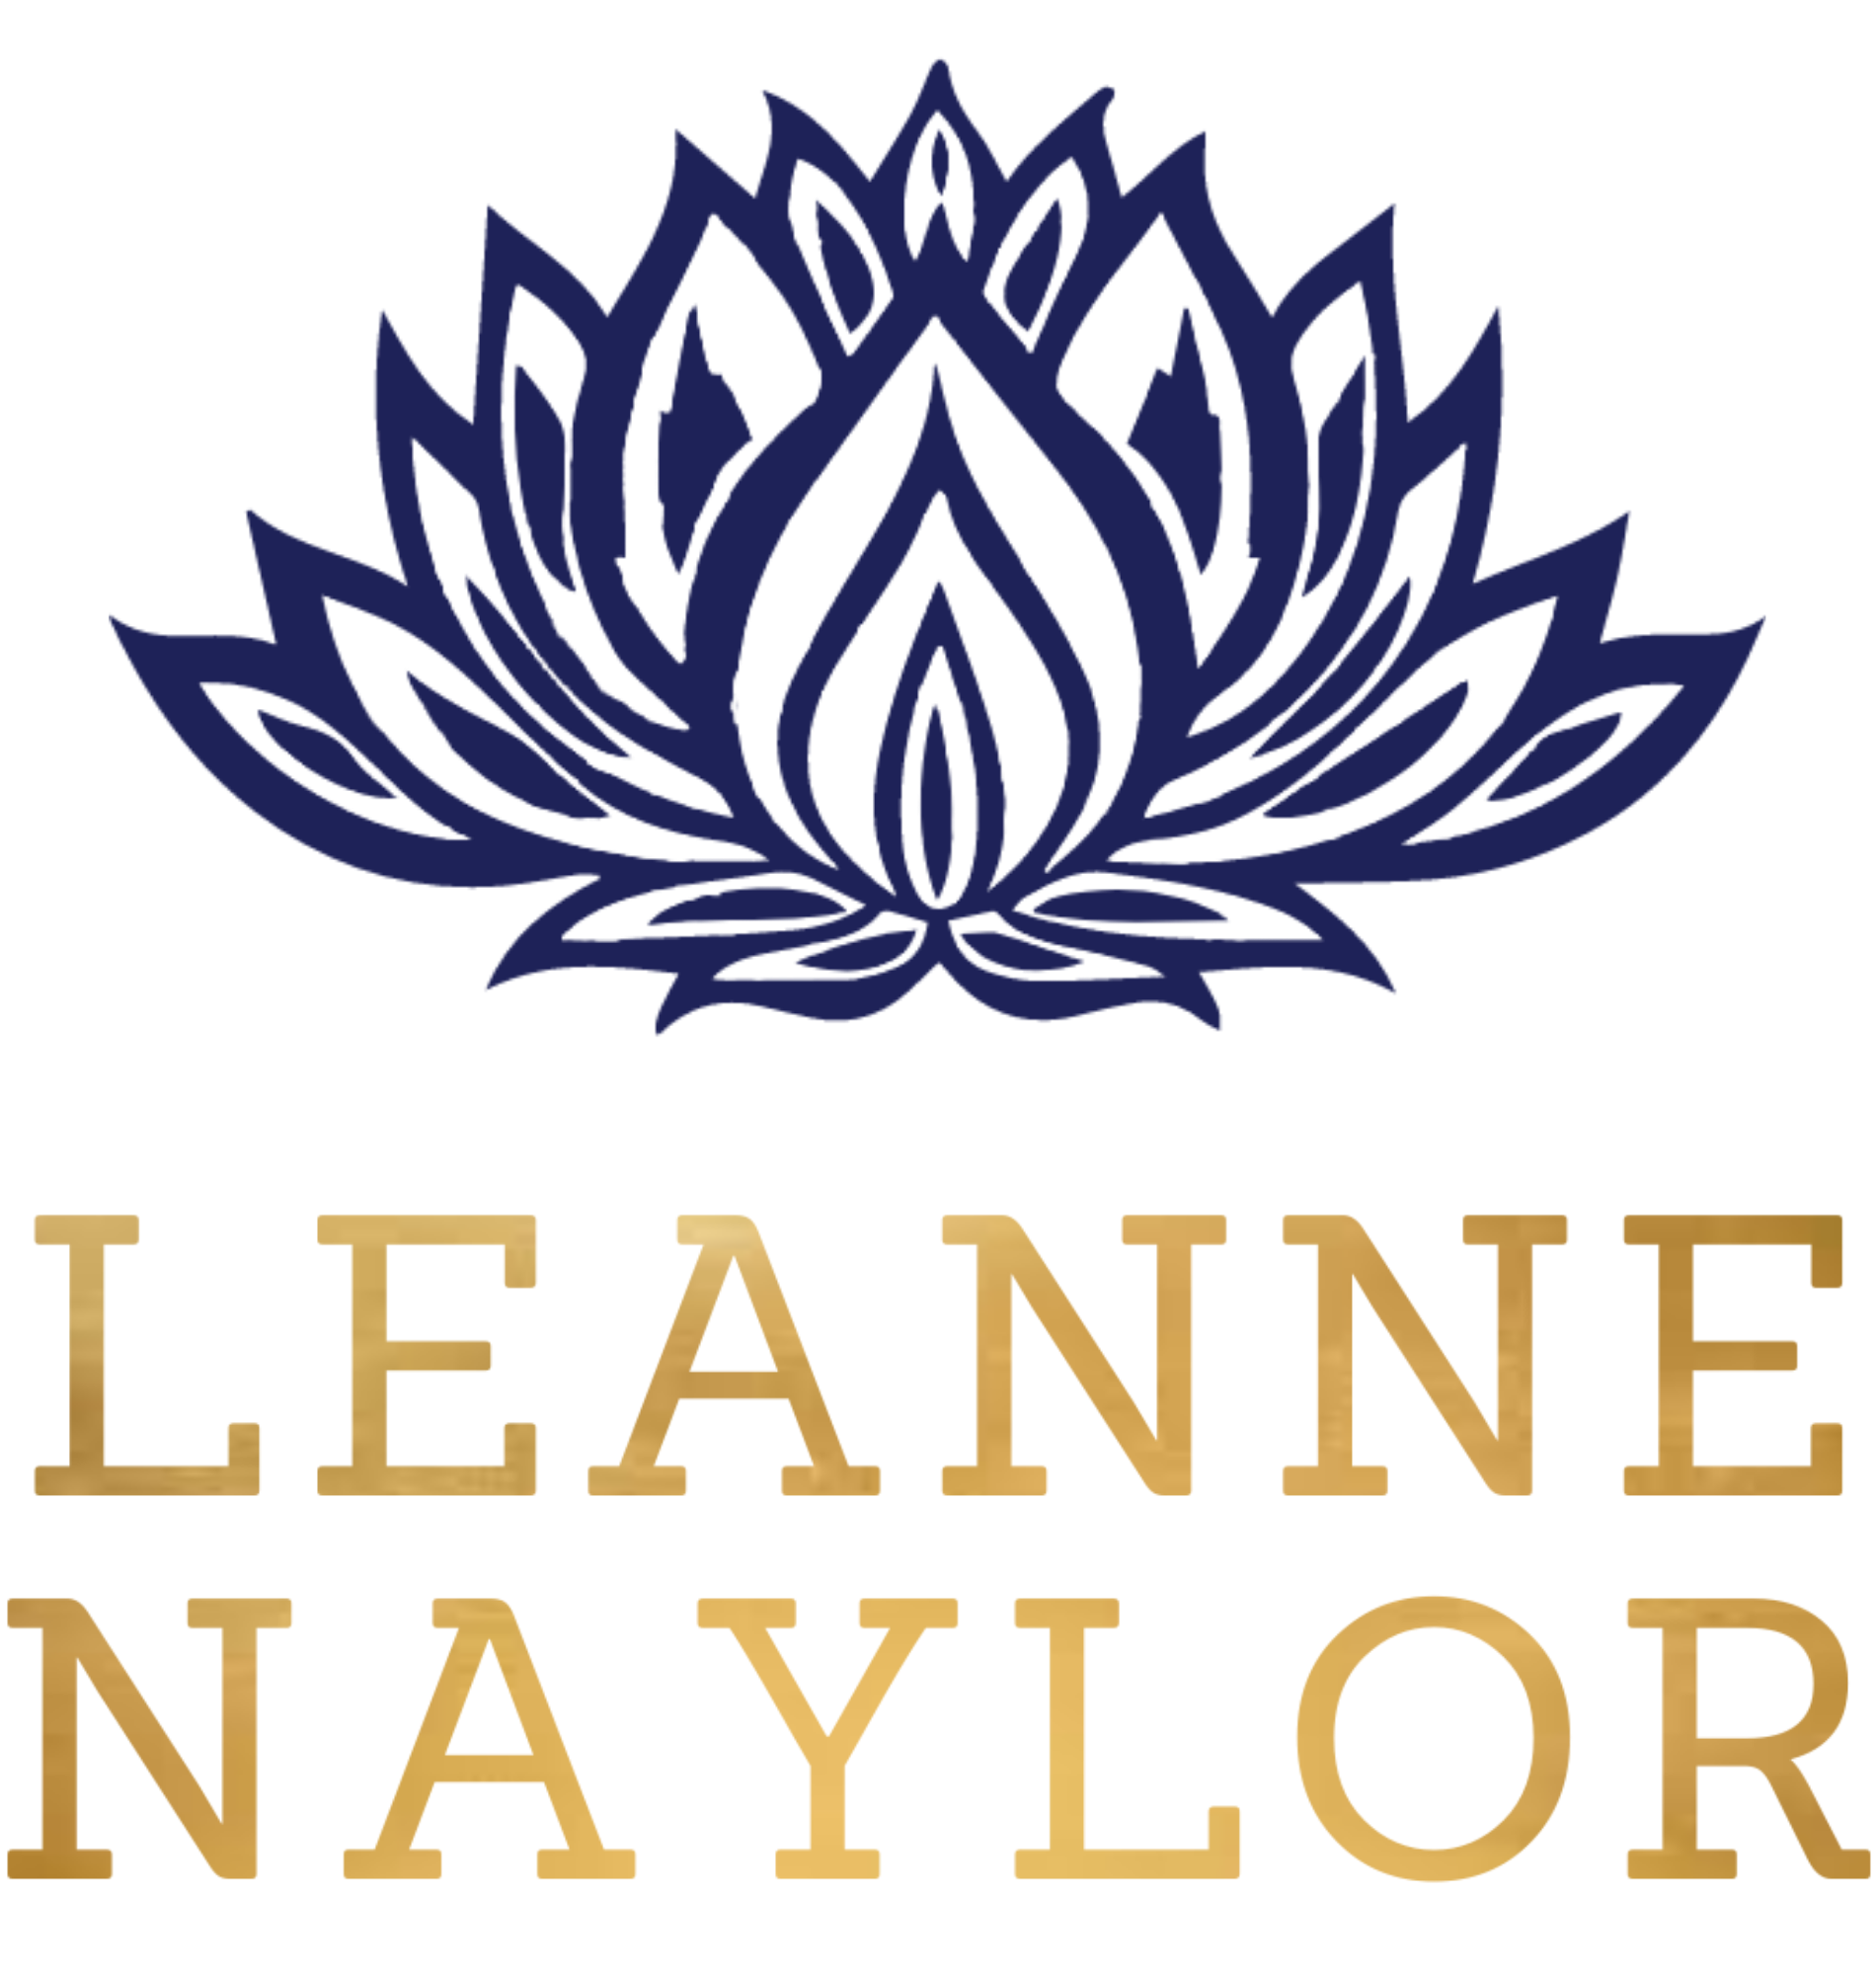 Leanne Naylor